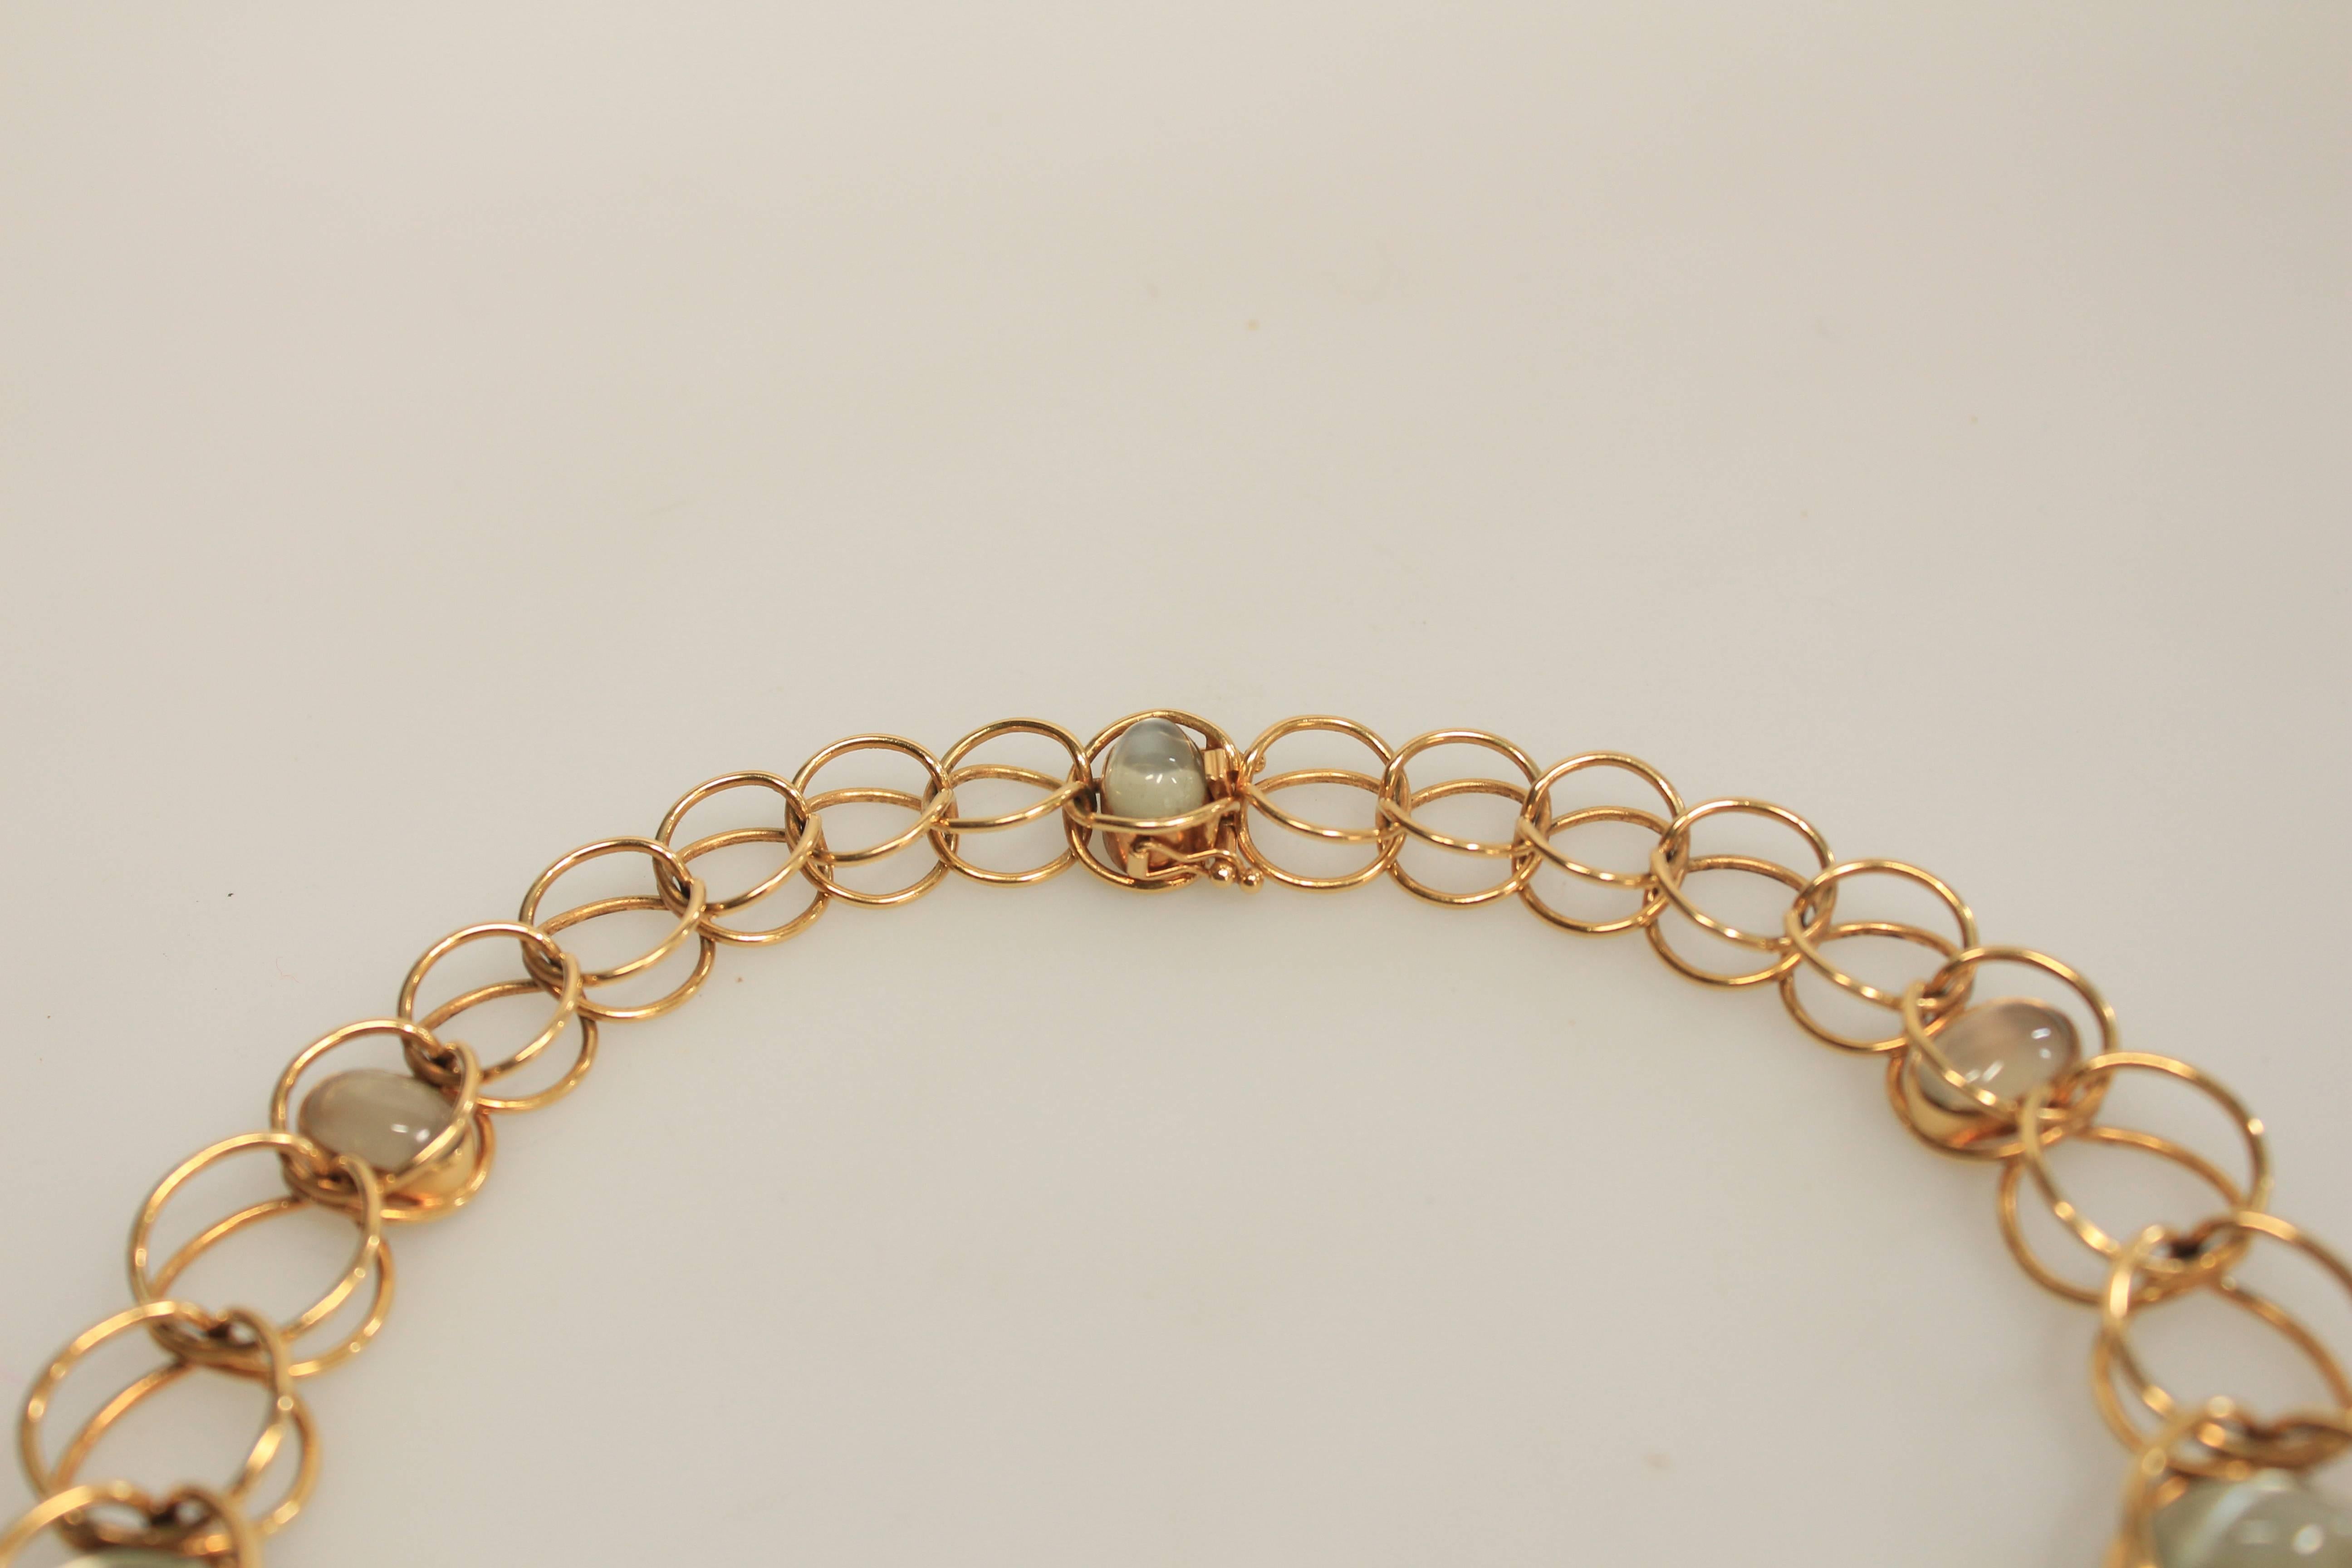 Georg Jensen 18K Gold and Moonstone Necklace & Bracelet Designed by Axel Jensen For Sale 4